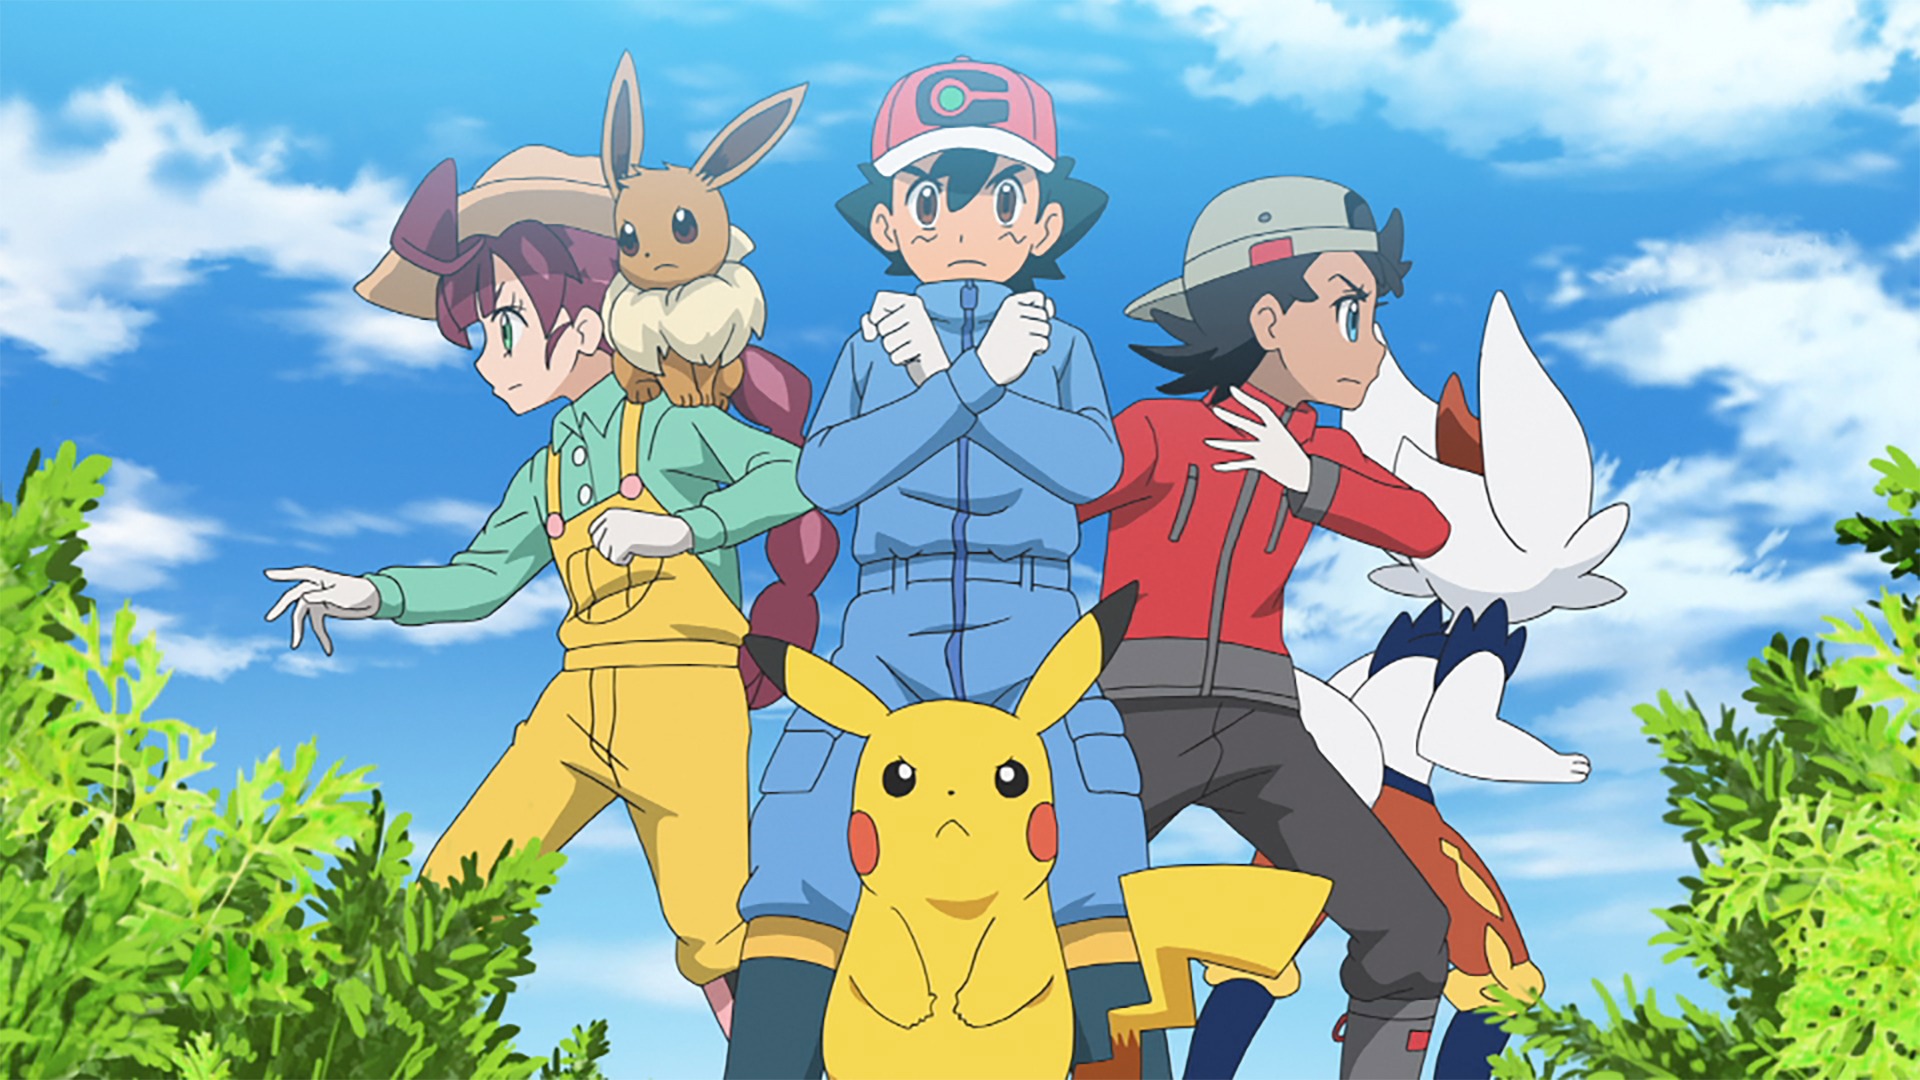 Pokémon Anime Continues on Netflix with Pokémon Master Journeys